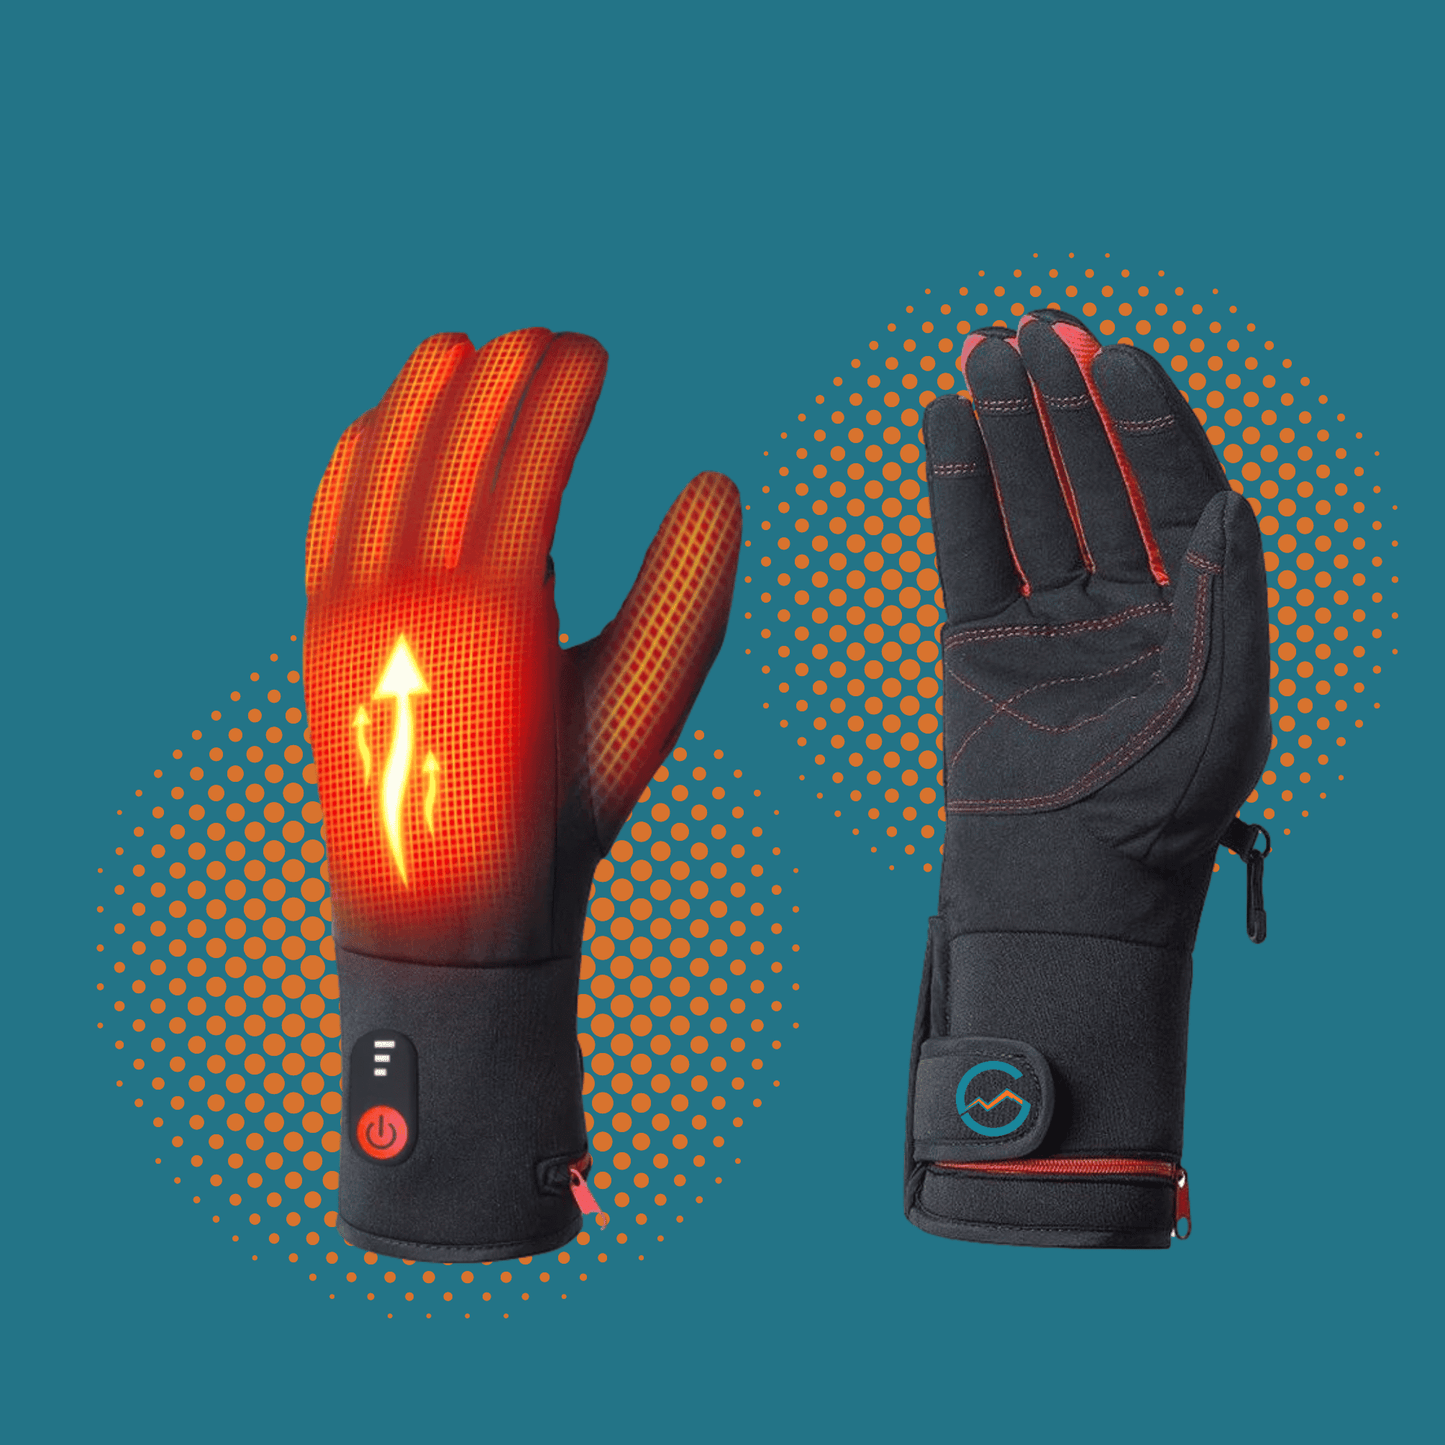 Gløde elektrisch verwarmde handschoenen rood/zwart